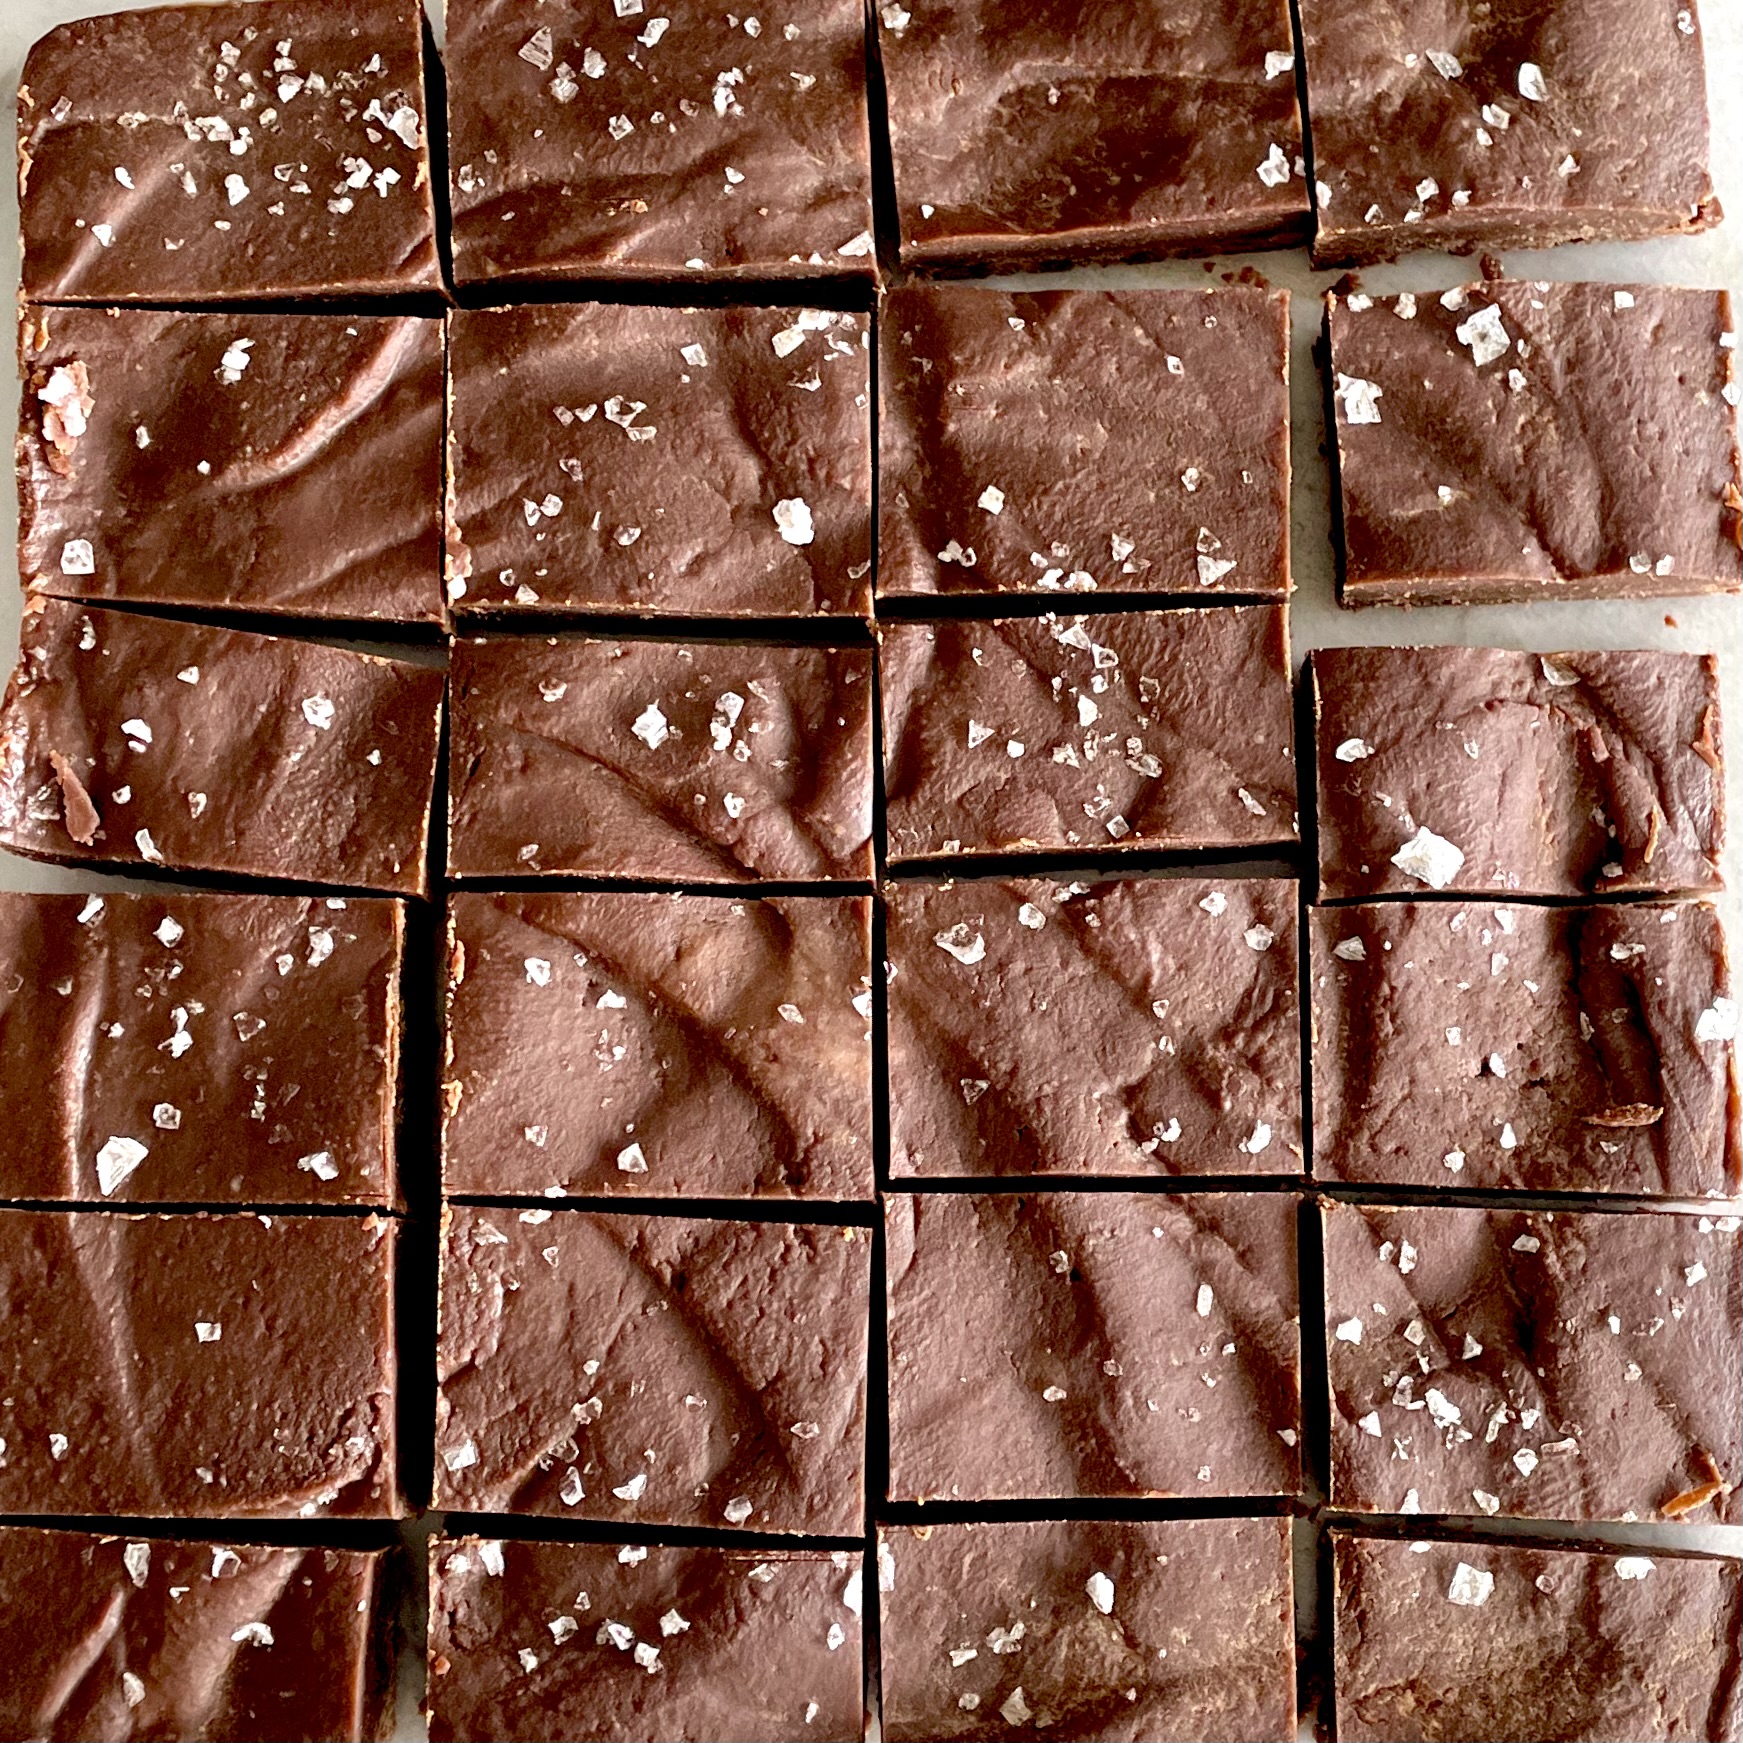 24 pieces of chocolate tahini fudge with sea salt